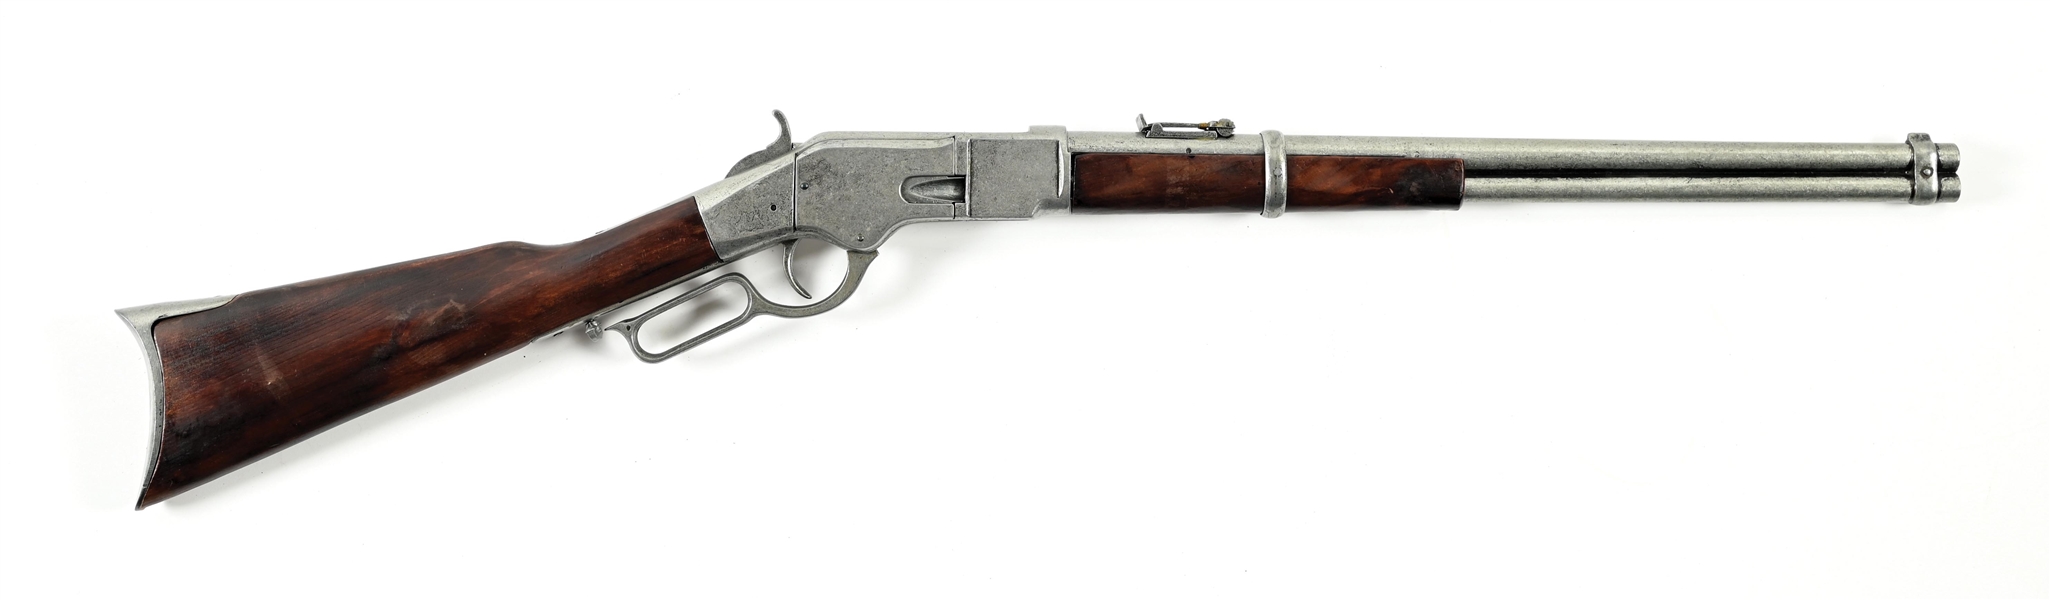 UNMARKED WINCHESTER 1873 SADDLE RING CARBINE PROP GUN.